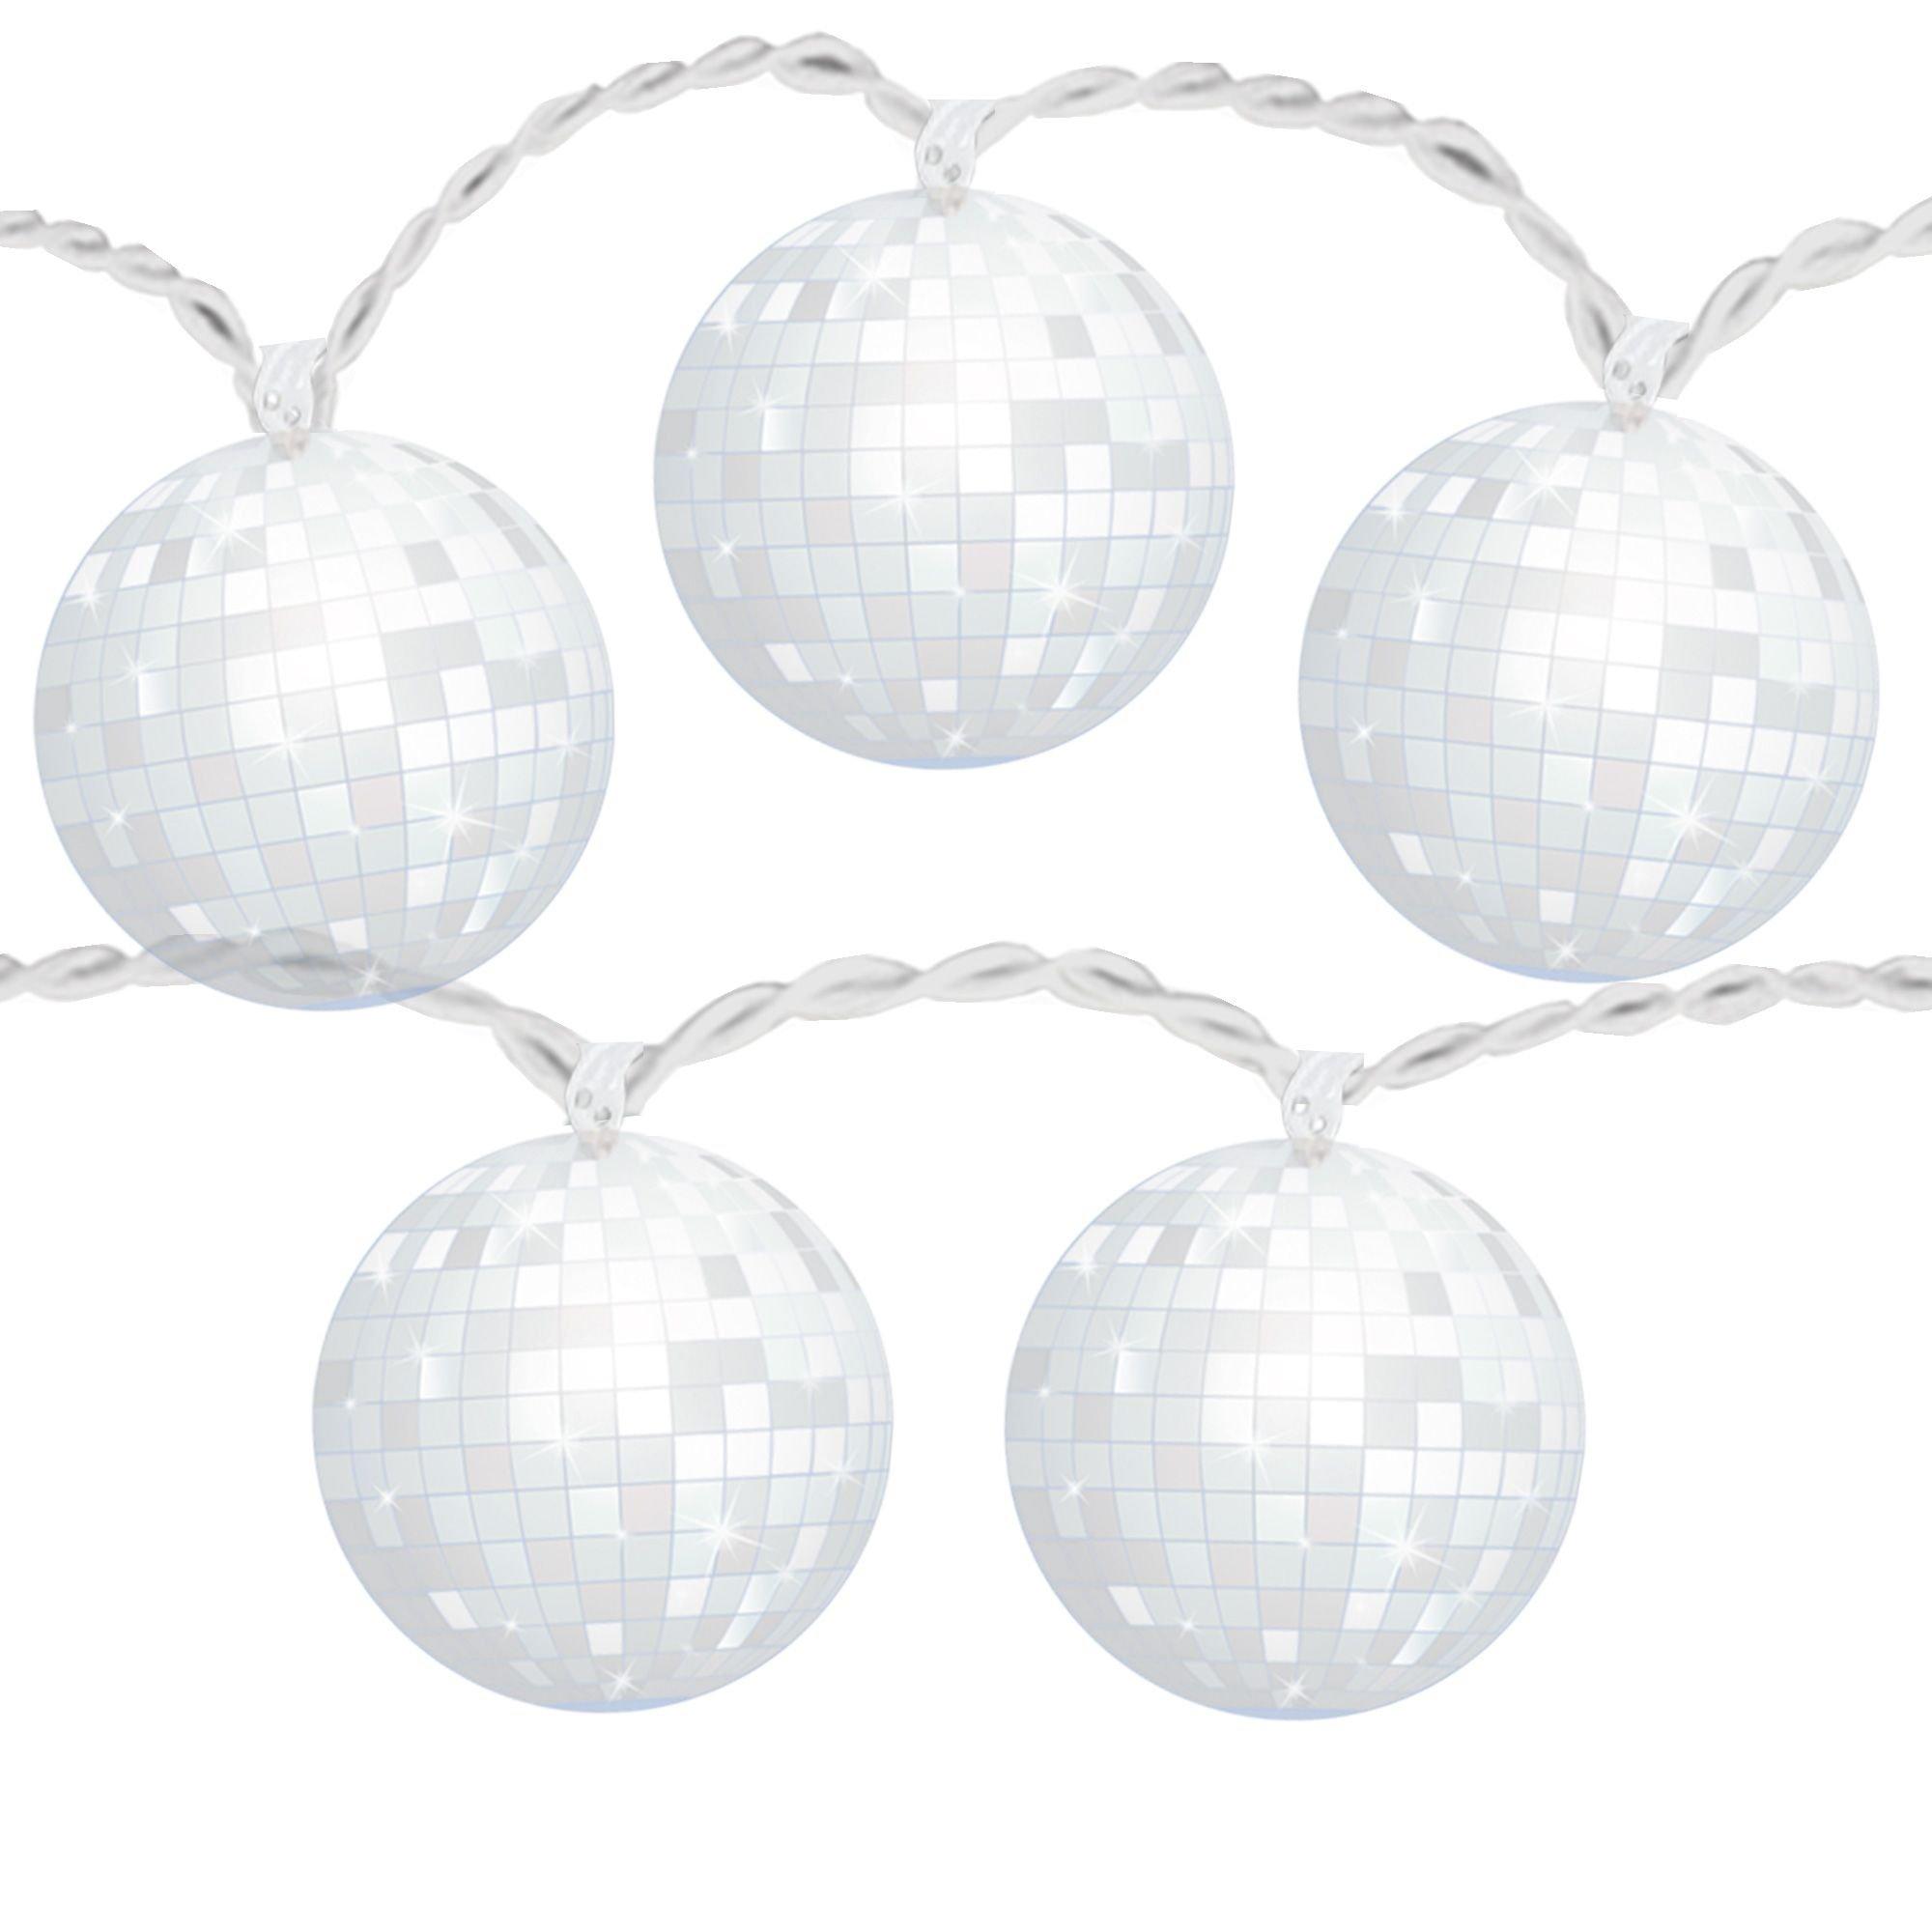 Mirror Ball String Lights: Mini disco balls that light up!